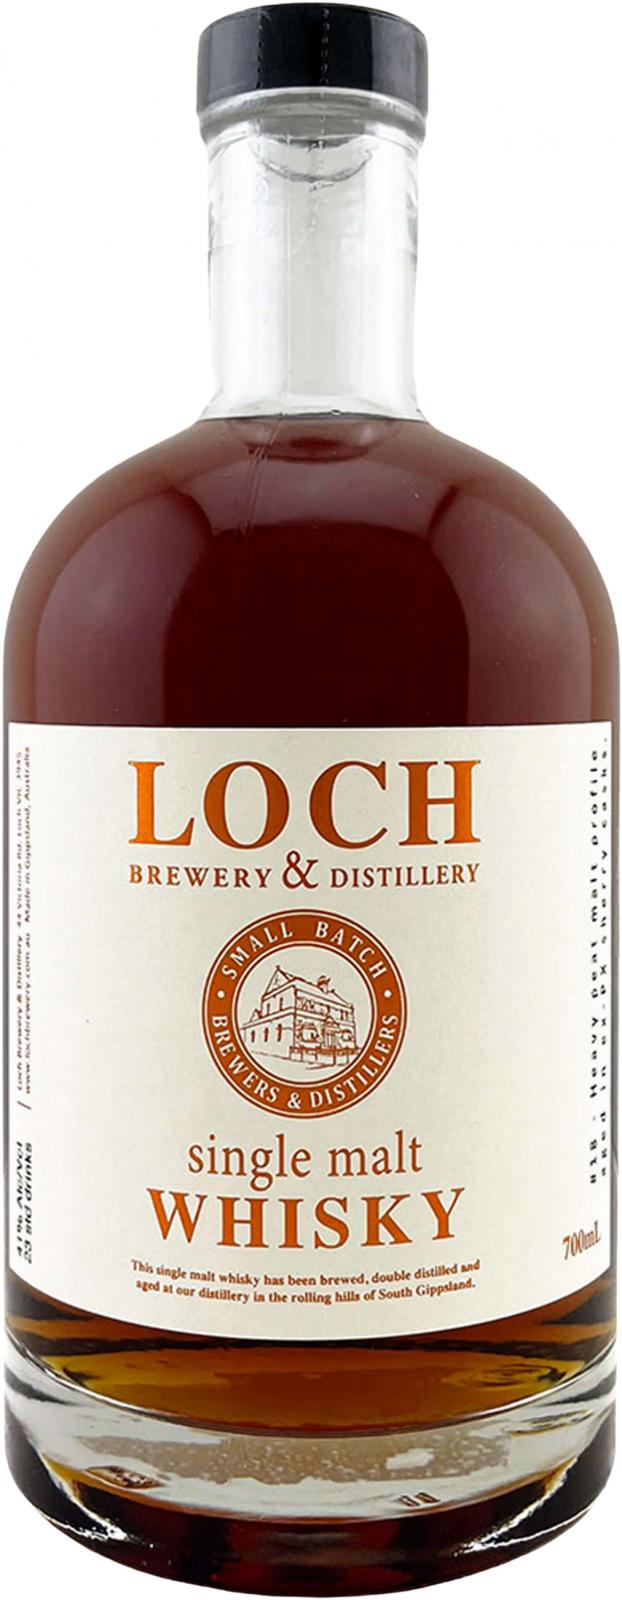 Loch Brewery & Distillery Single Malt Whisky